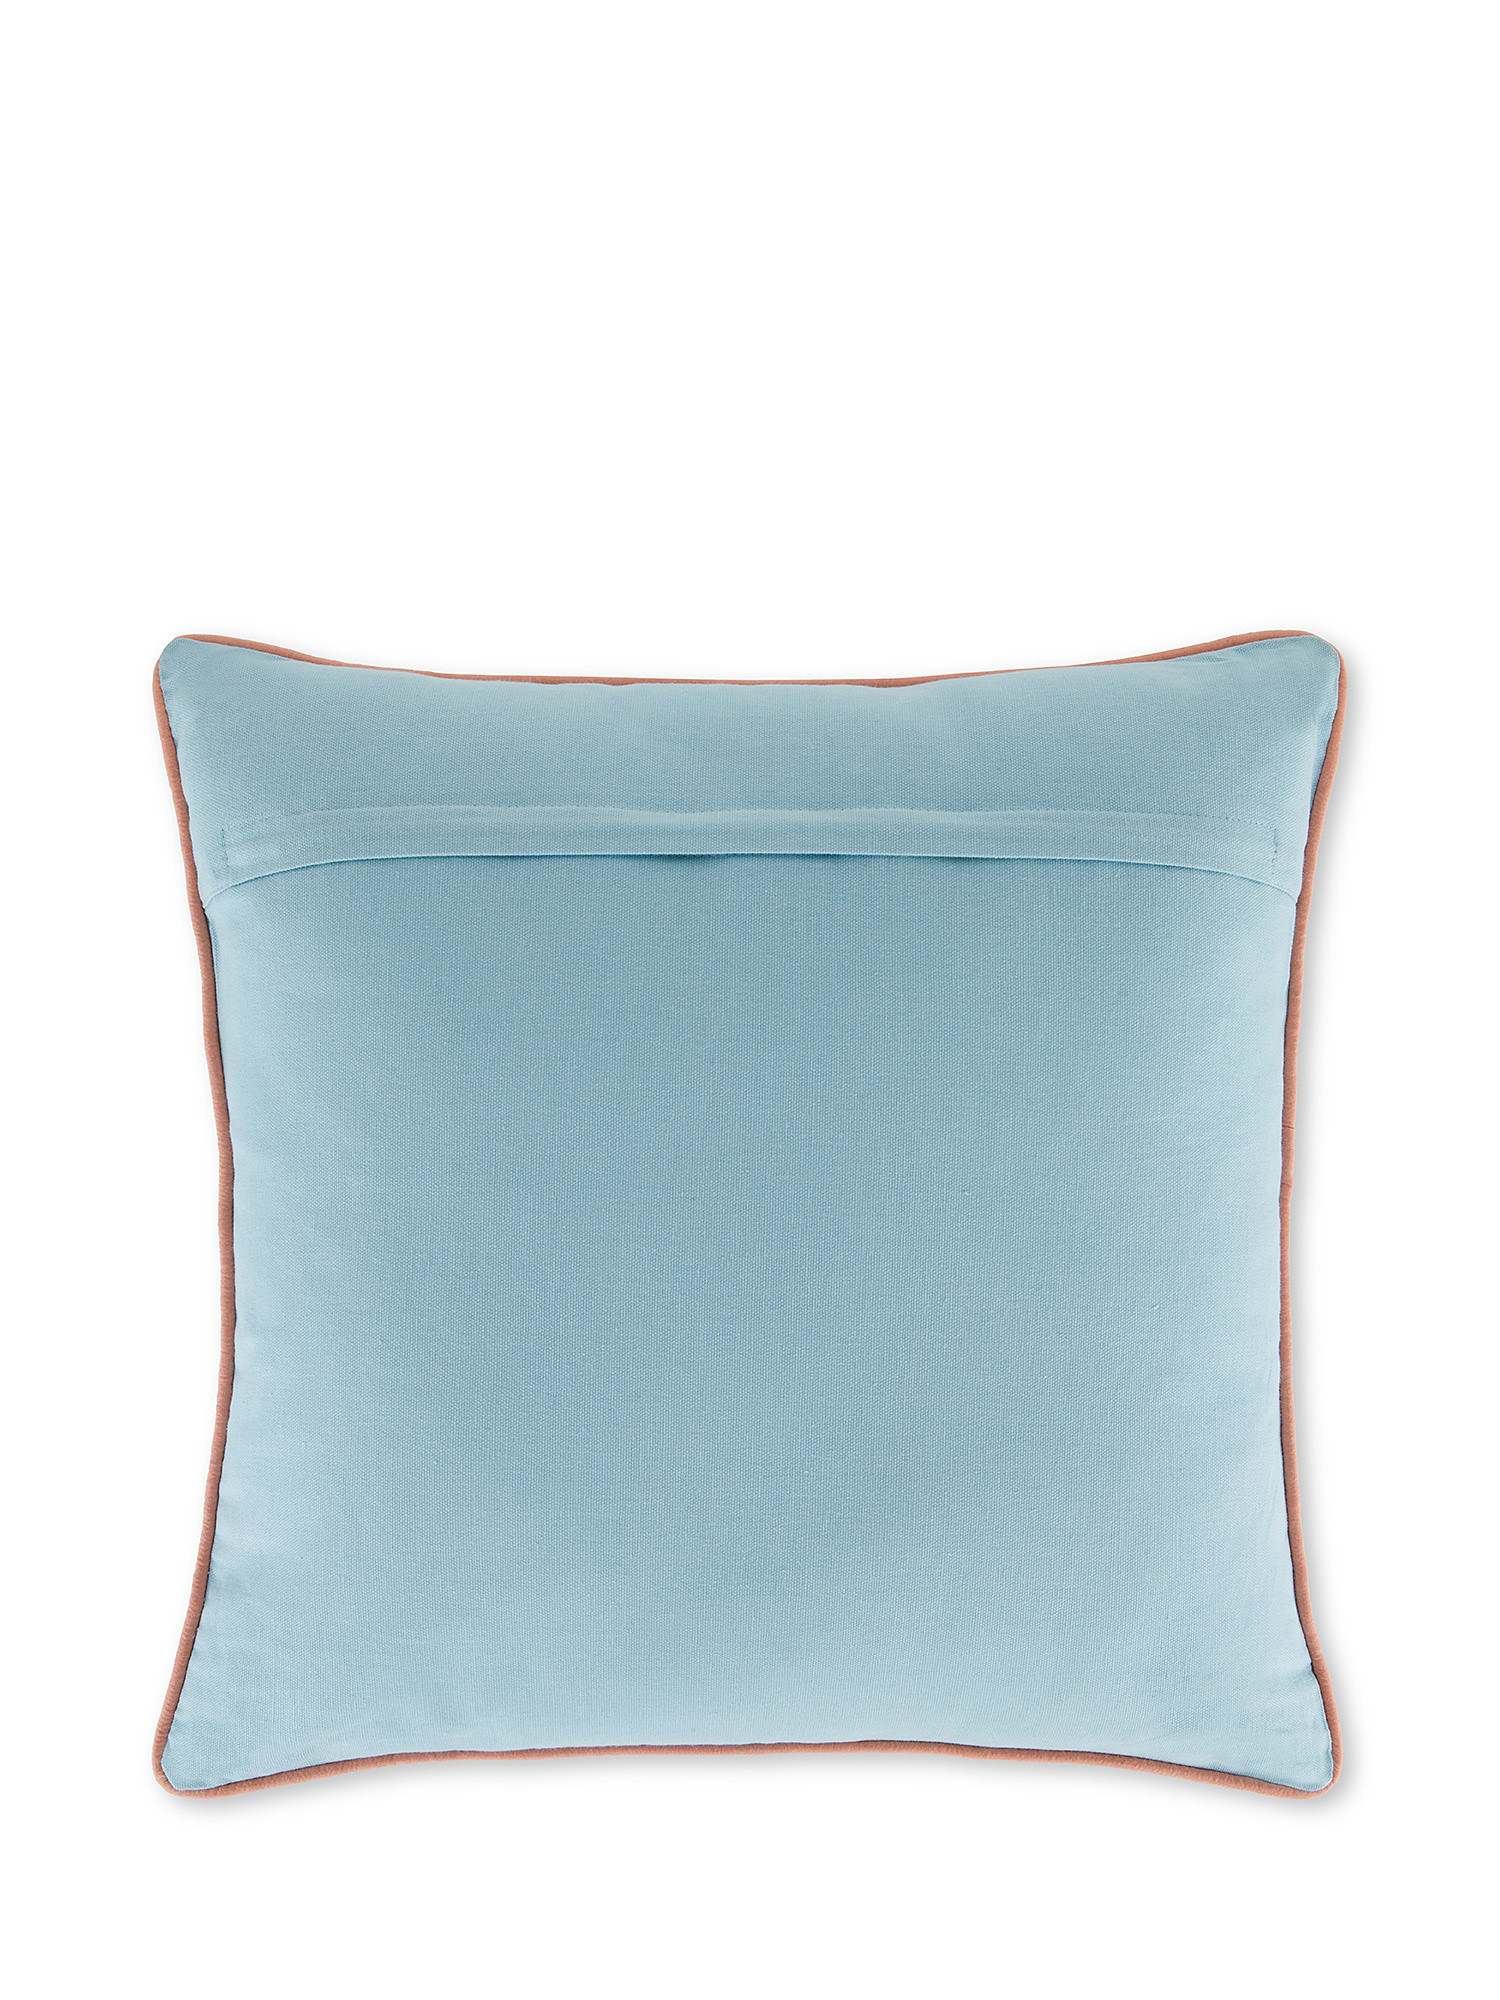 Marine embroidery cushion 45x45cm, Light Blue, large image number 1